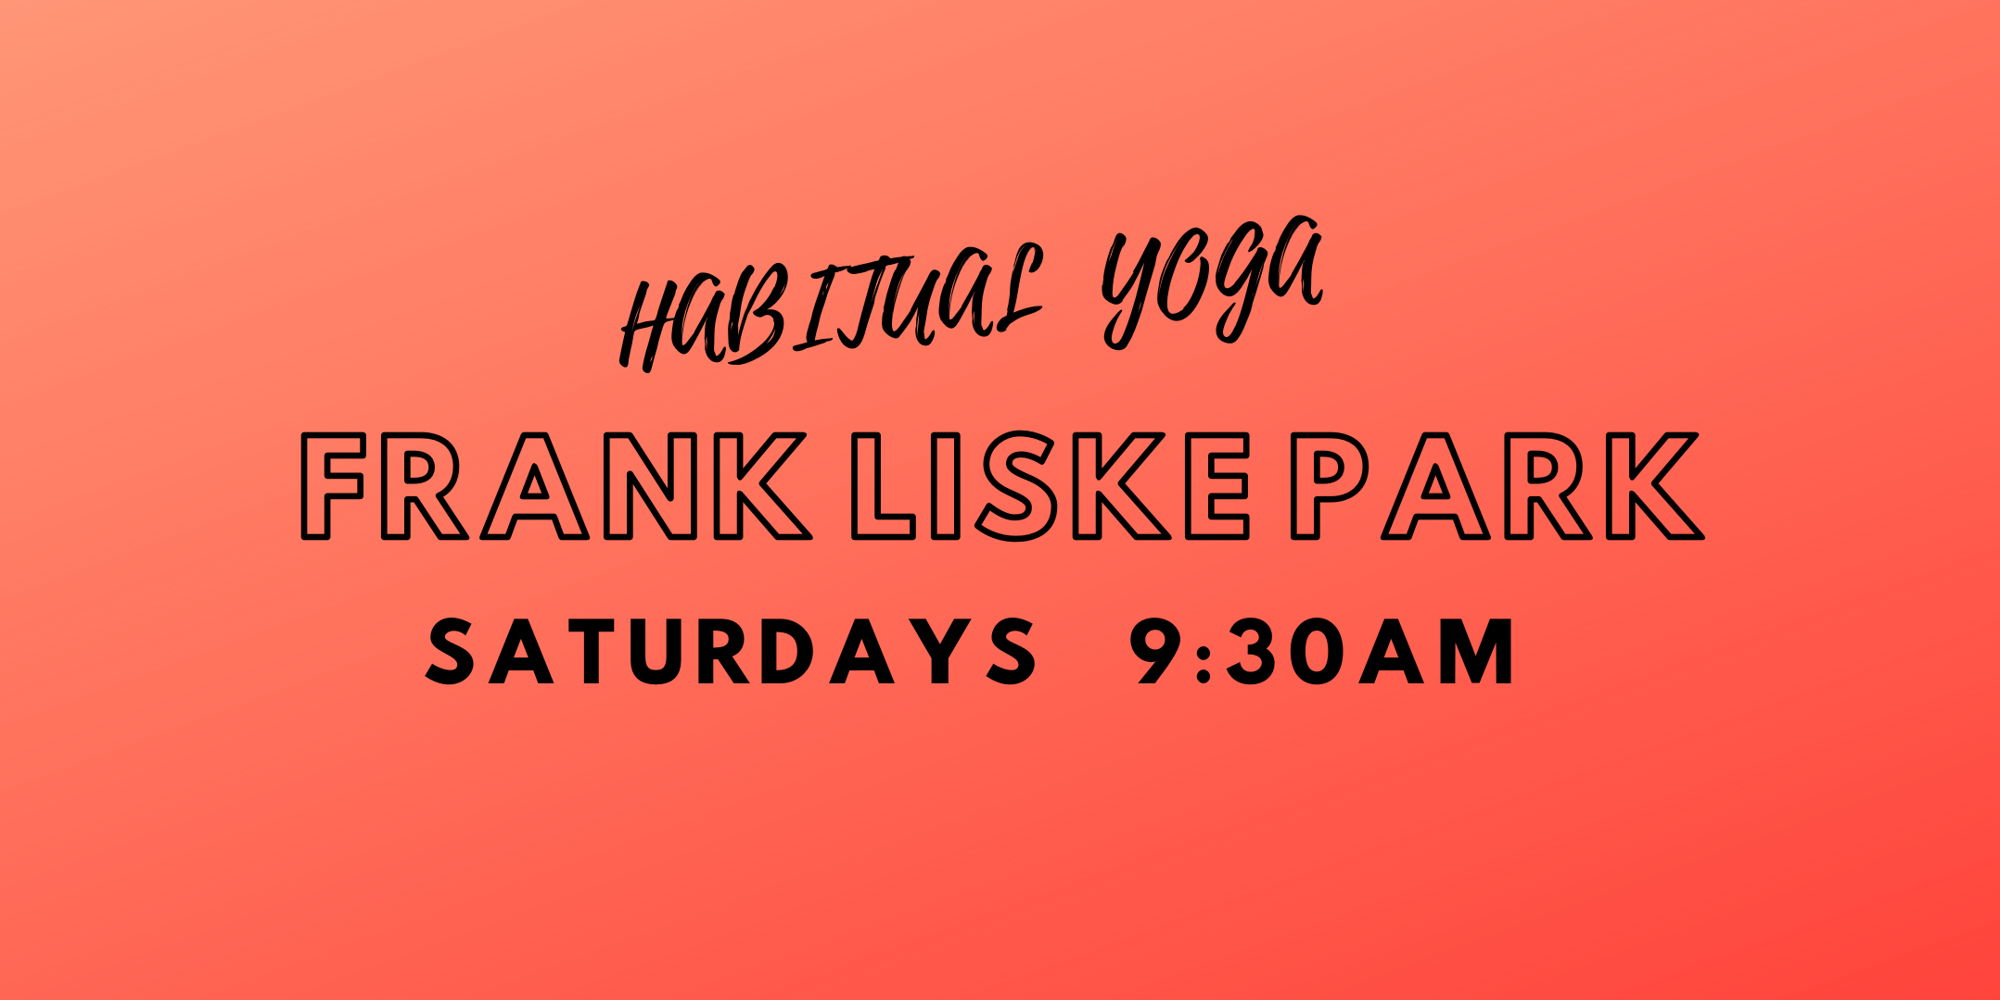 Habitual YOGA -FRANK LISKE PARK promotional image